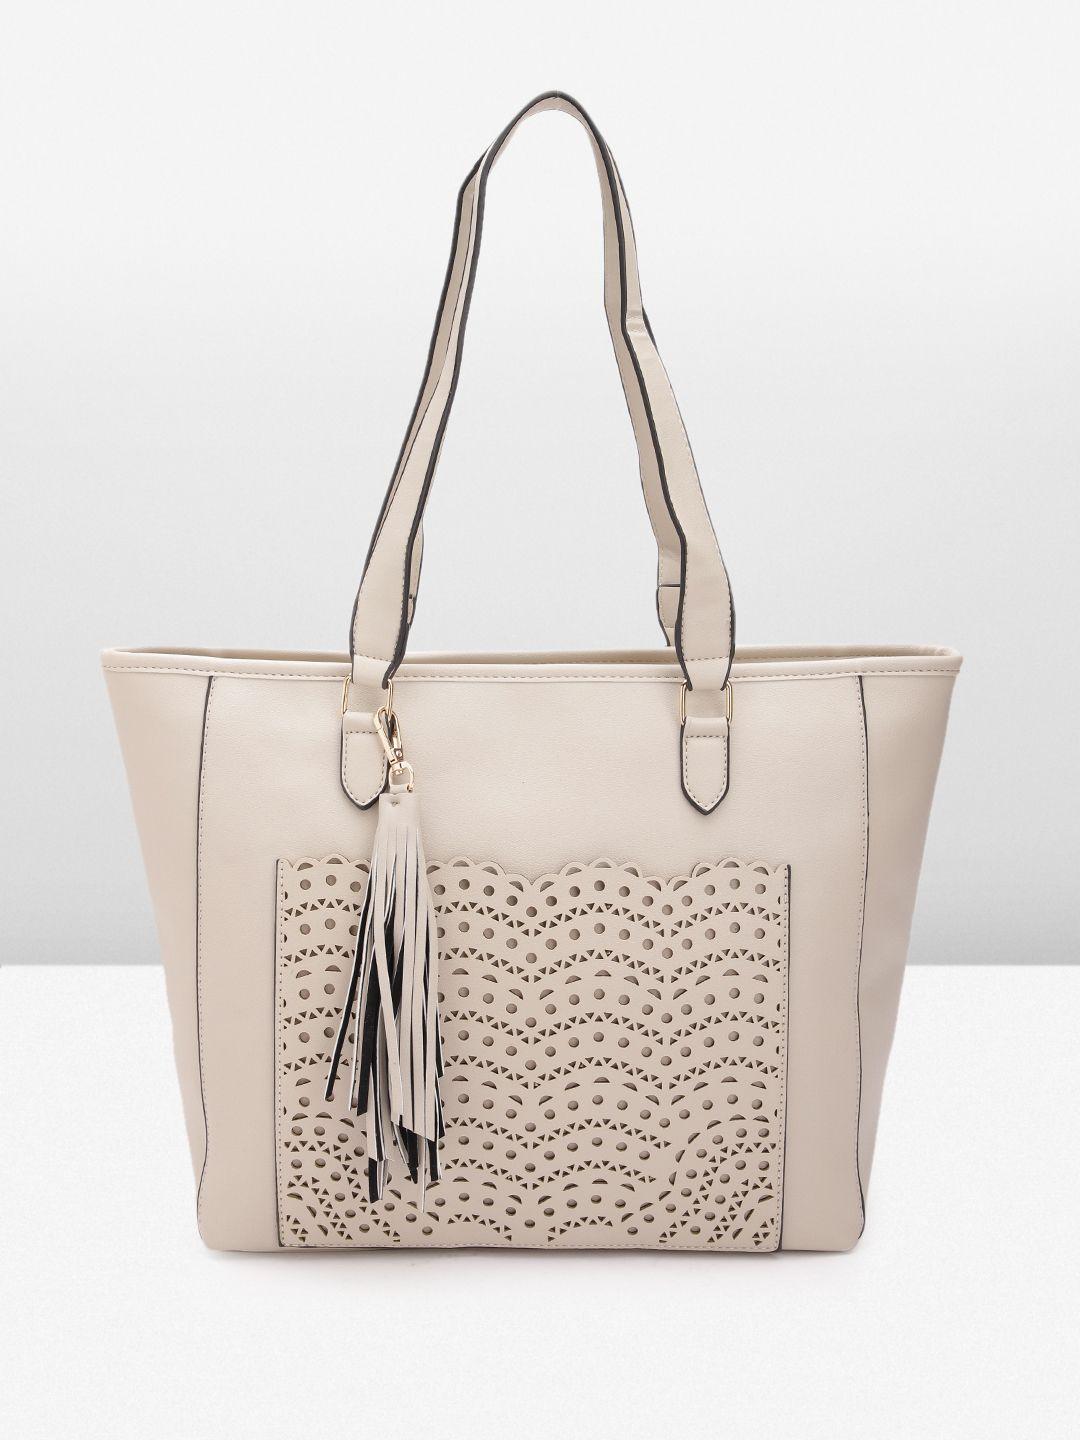 dorothy perkins structured shoulder bag with lasercut tasselled detail